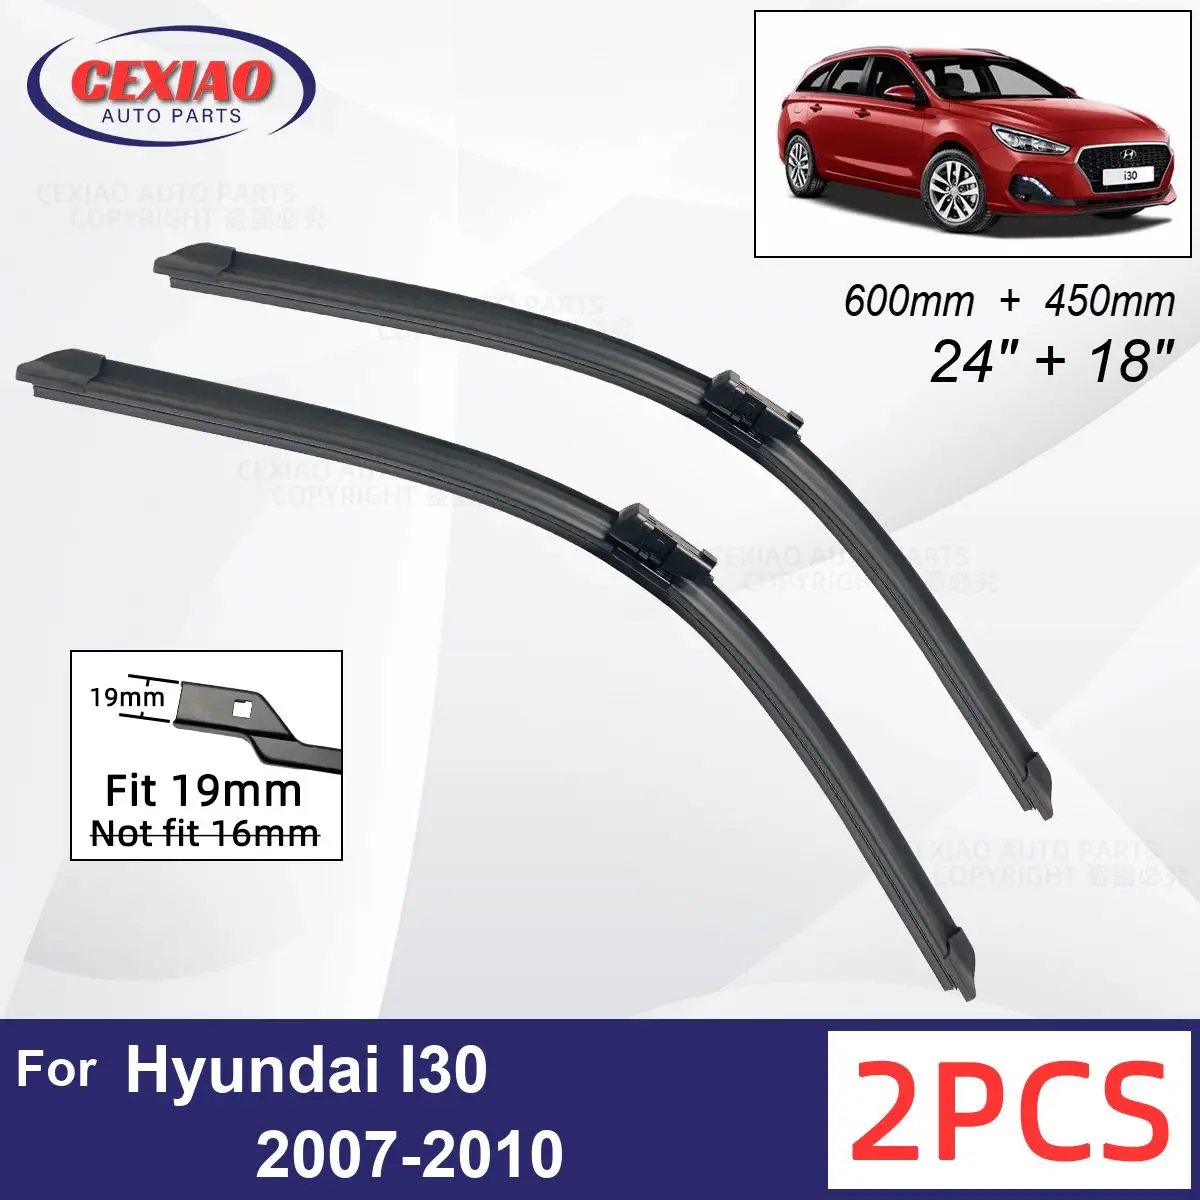 

Car Wiper For Hyundai I30 2007-2010 Front Wiper Blades Soft Rubber Windscreen Wipers Auto Windshield 24"+18" 600mm + 450mm